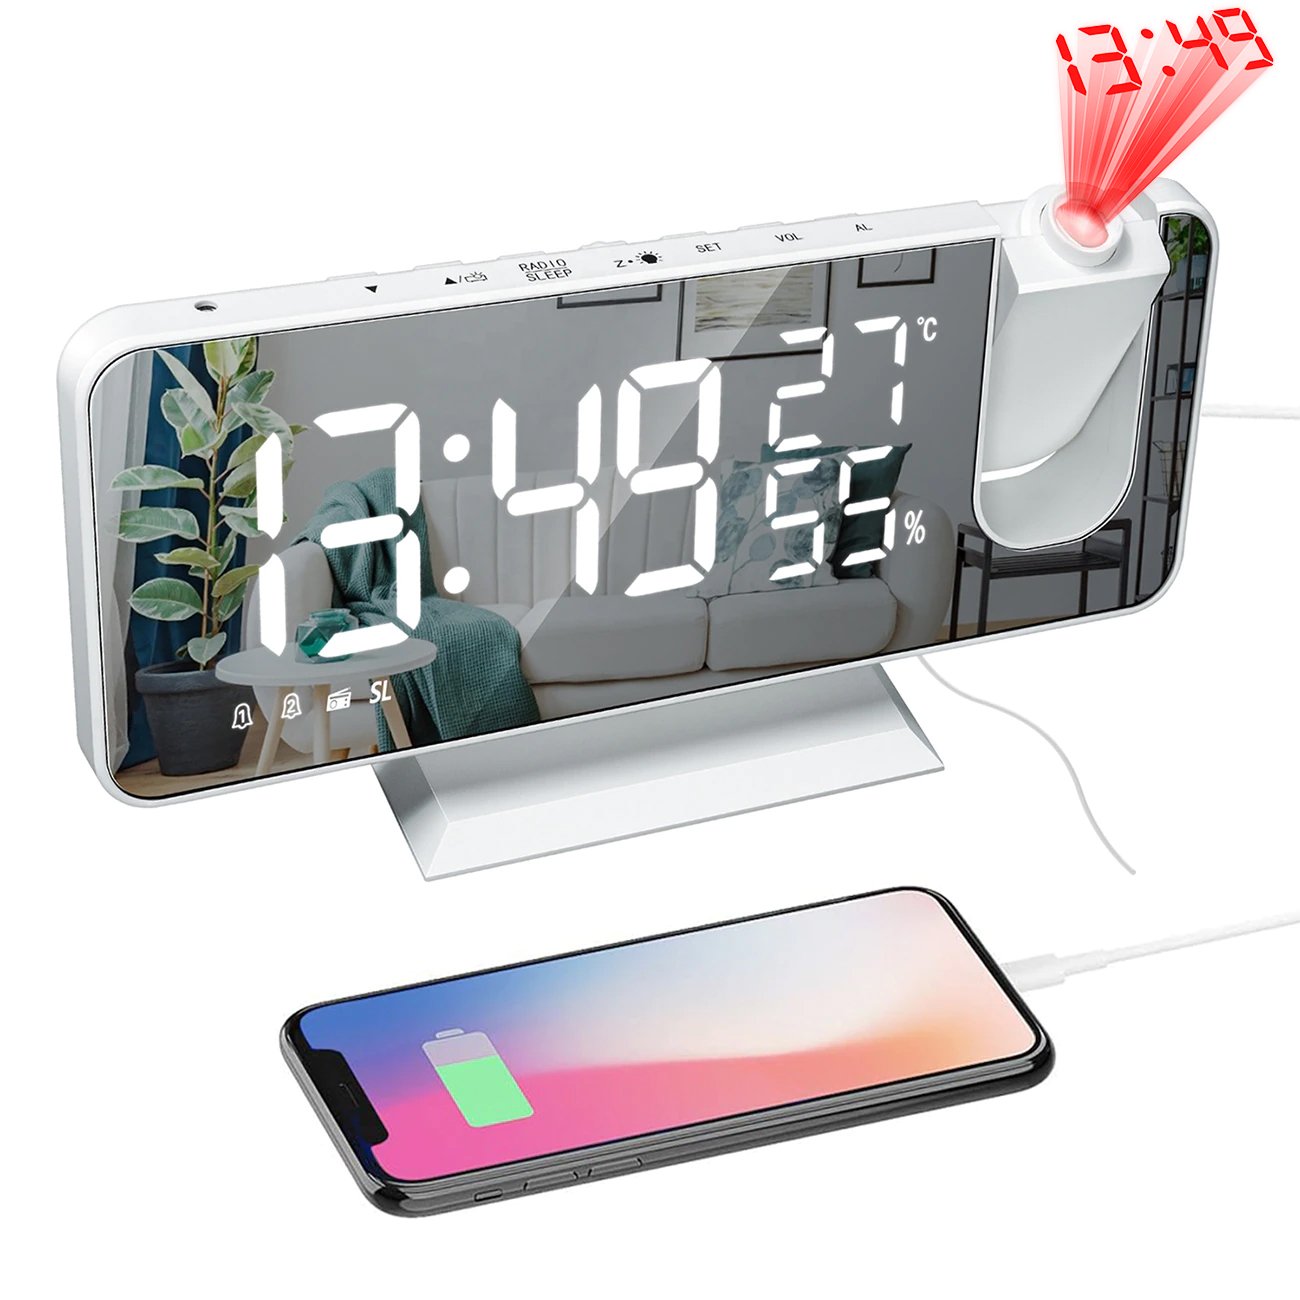 FM Radio LED Digital Smart Alarm Clock Watch Table Electronic Desktop Clocks USB Wake Up Clock with 180° Time Projection Snooze